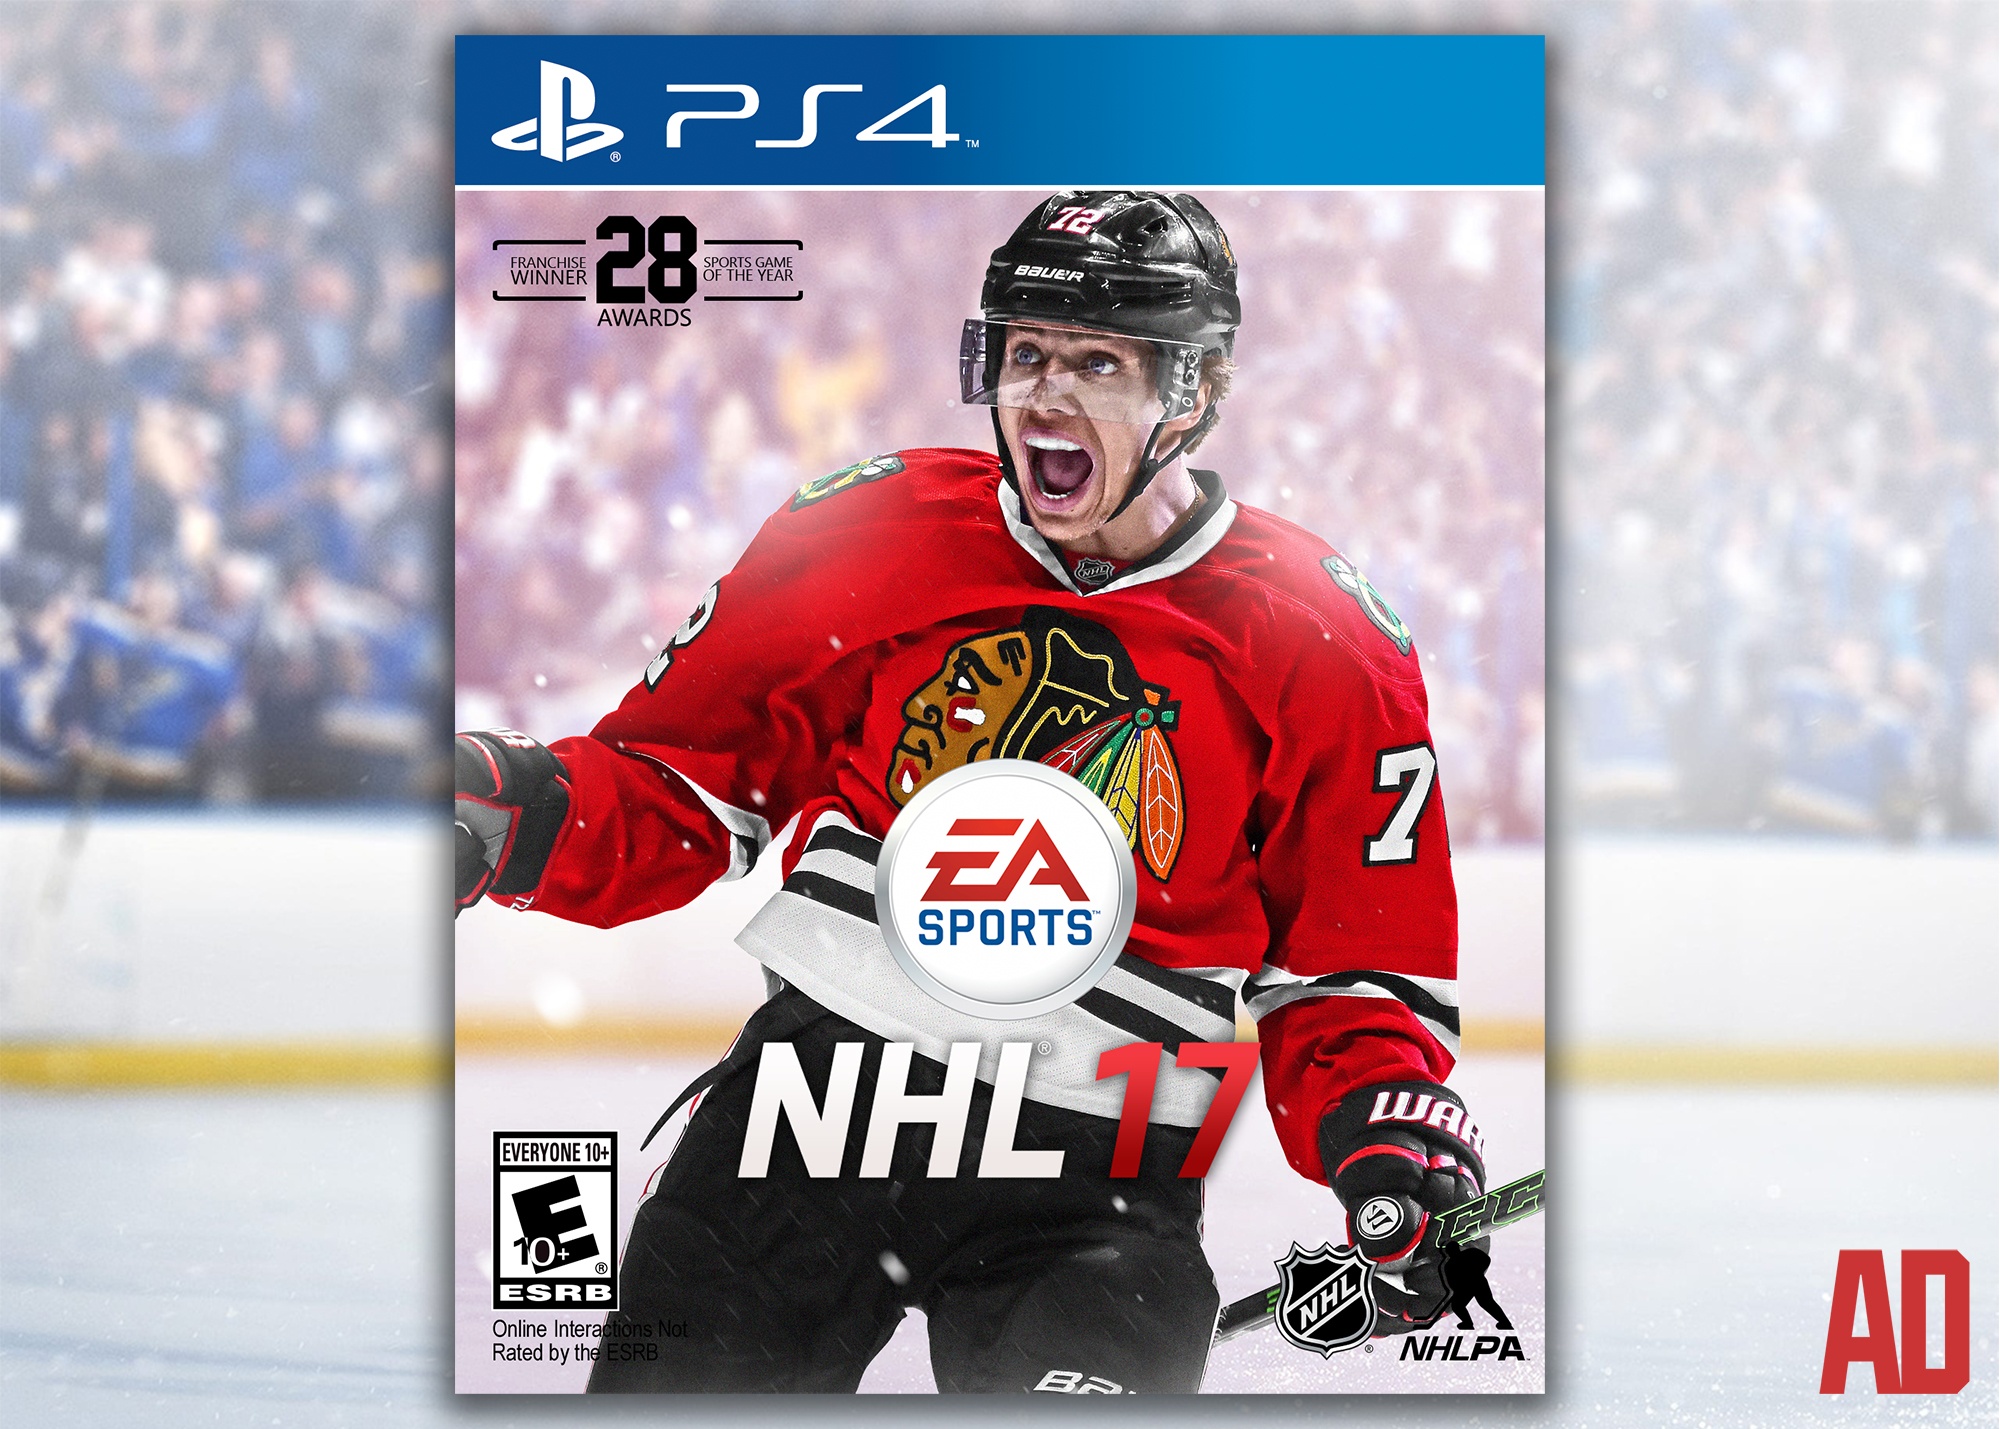 NHL 17 box cover